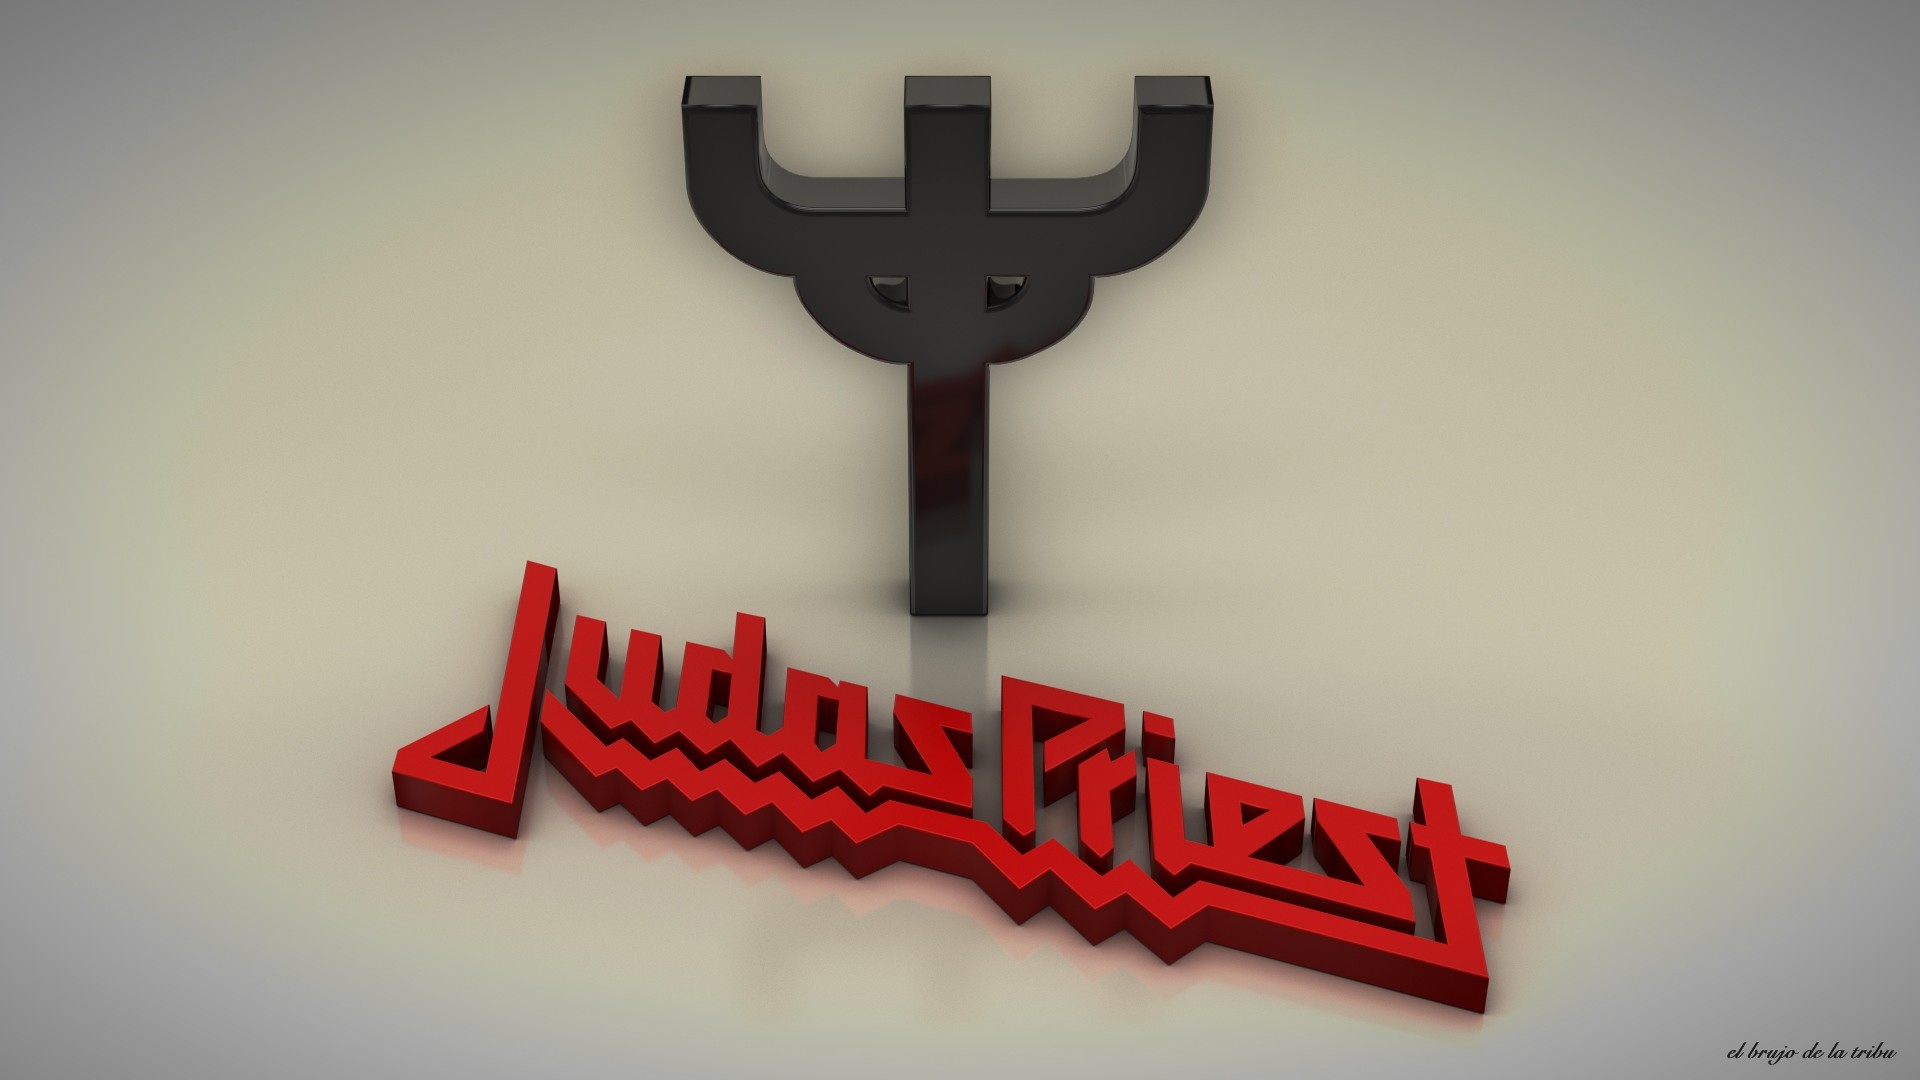 1920x1080 Judas Priest Logo by elbrujodelatribu Judas Priest Logo by elbrujodelatribu